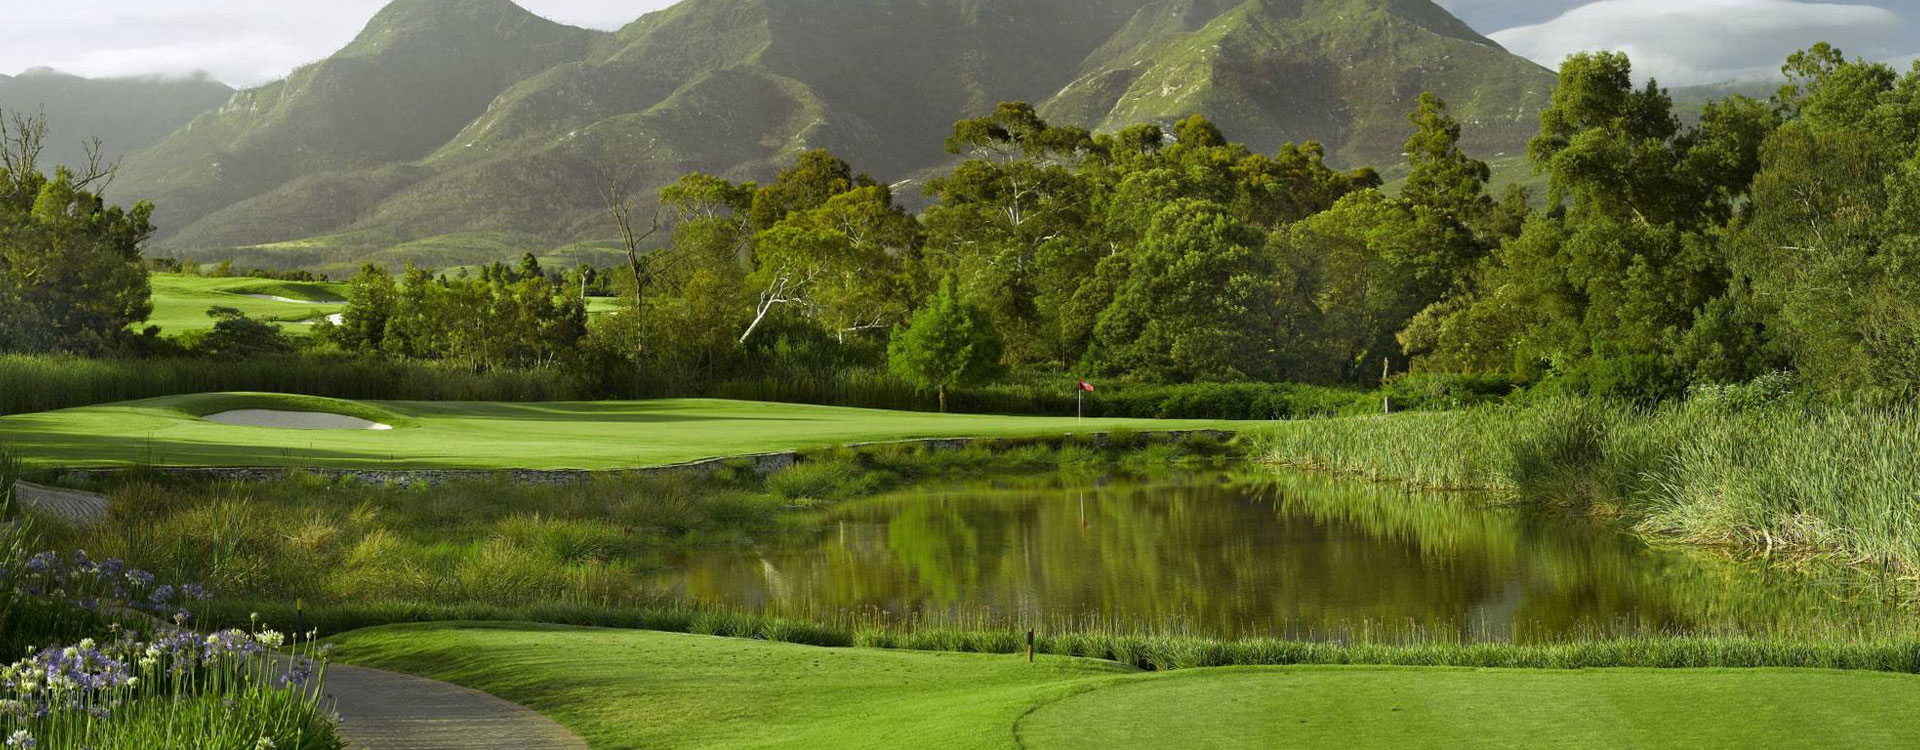 10 Day Cape Town and Garden Route Golf Safari